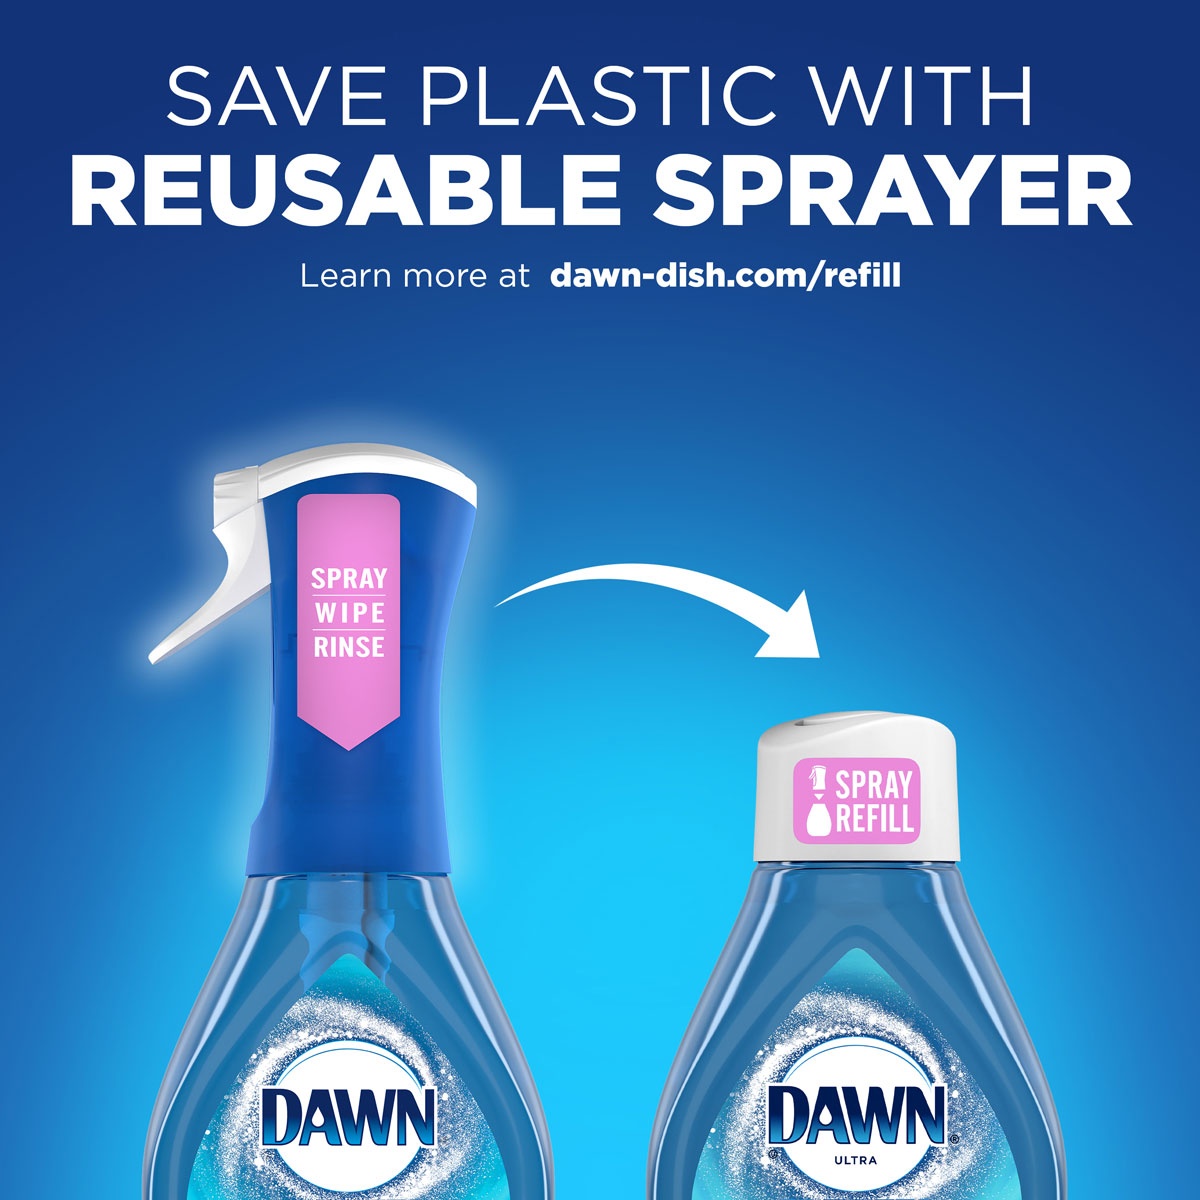 Dawn Platinum Powerwash Dish Spray Lavender - Save plastic with reusable sprayer